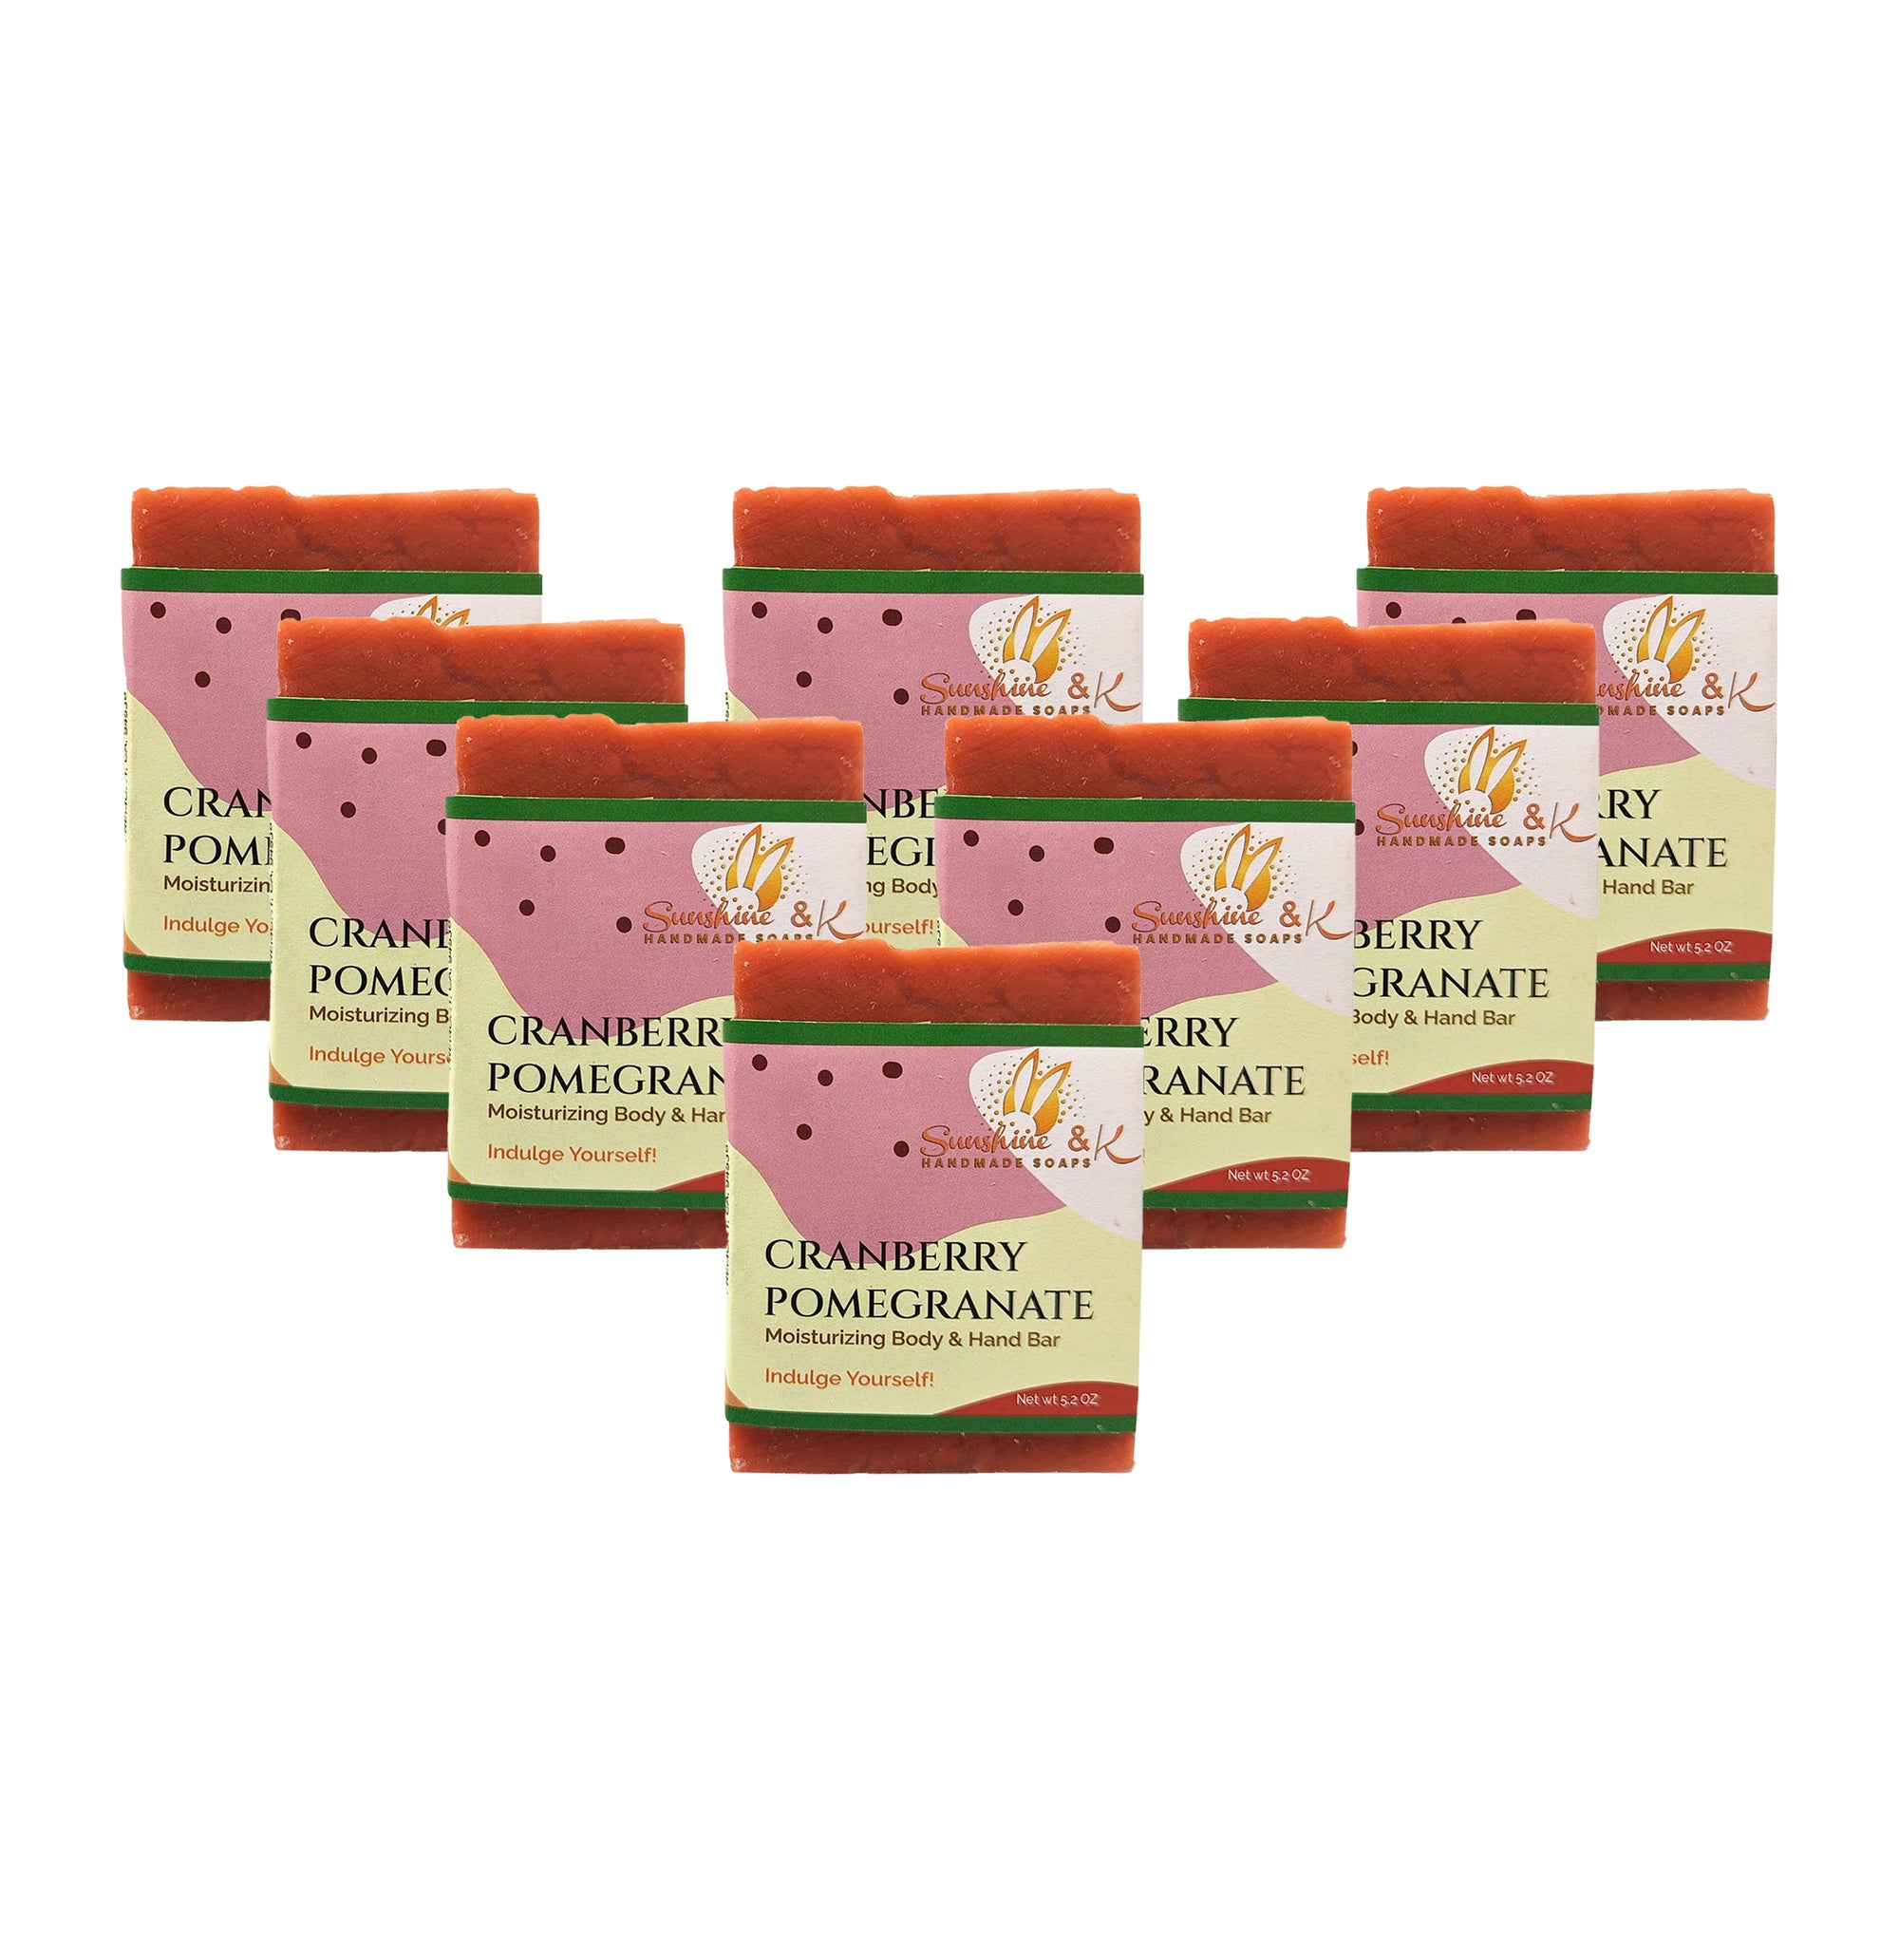 Cranberry Pomegranate Bar Soap - Body & Face Bar Soap, Handmade Bath Soap, Moisturizing Bar Soap With Beeswax, Rice Bran Oil, & Natural Base Oils, Natural Soap Bars, 5 oz, Sunshine & K Handmade Soaps